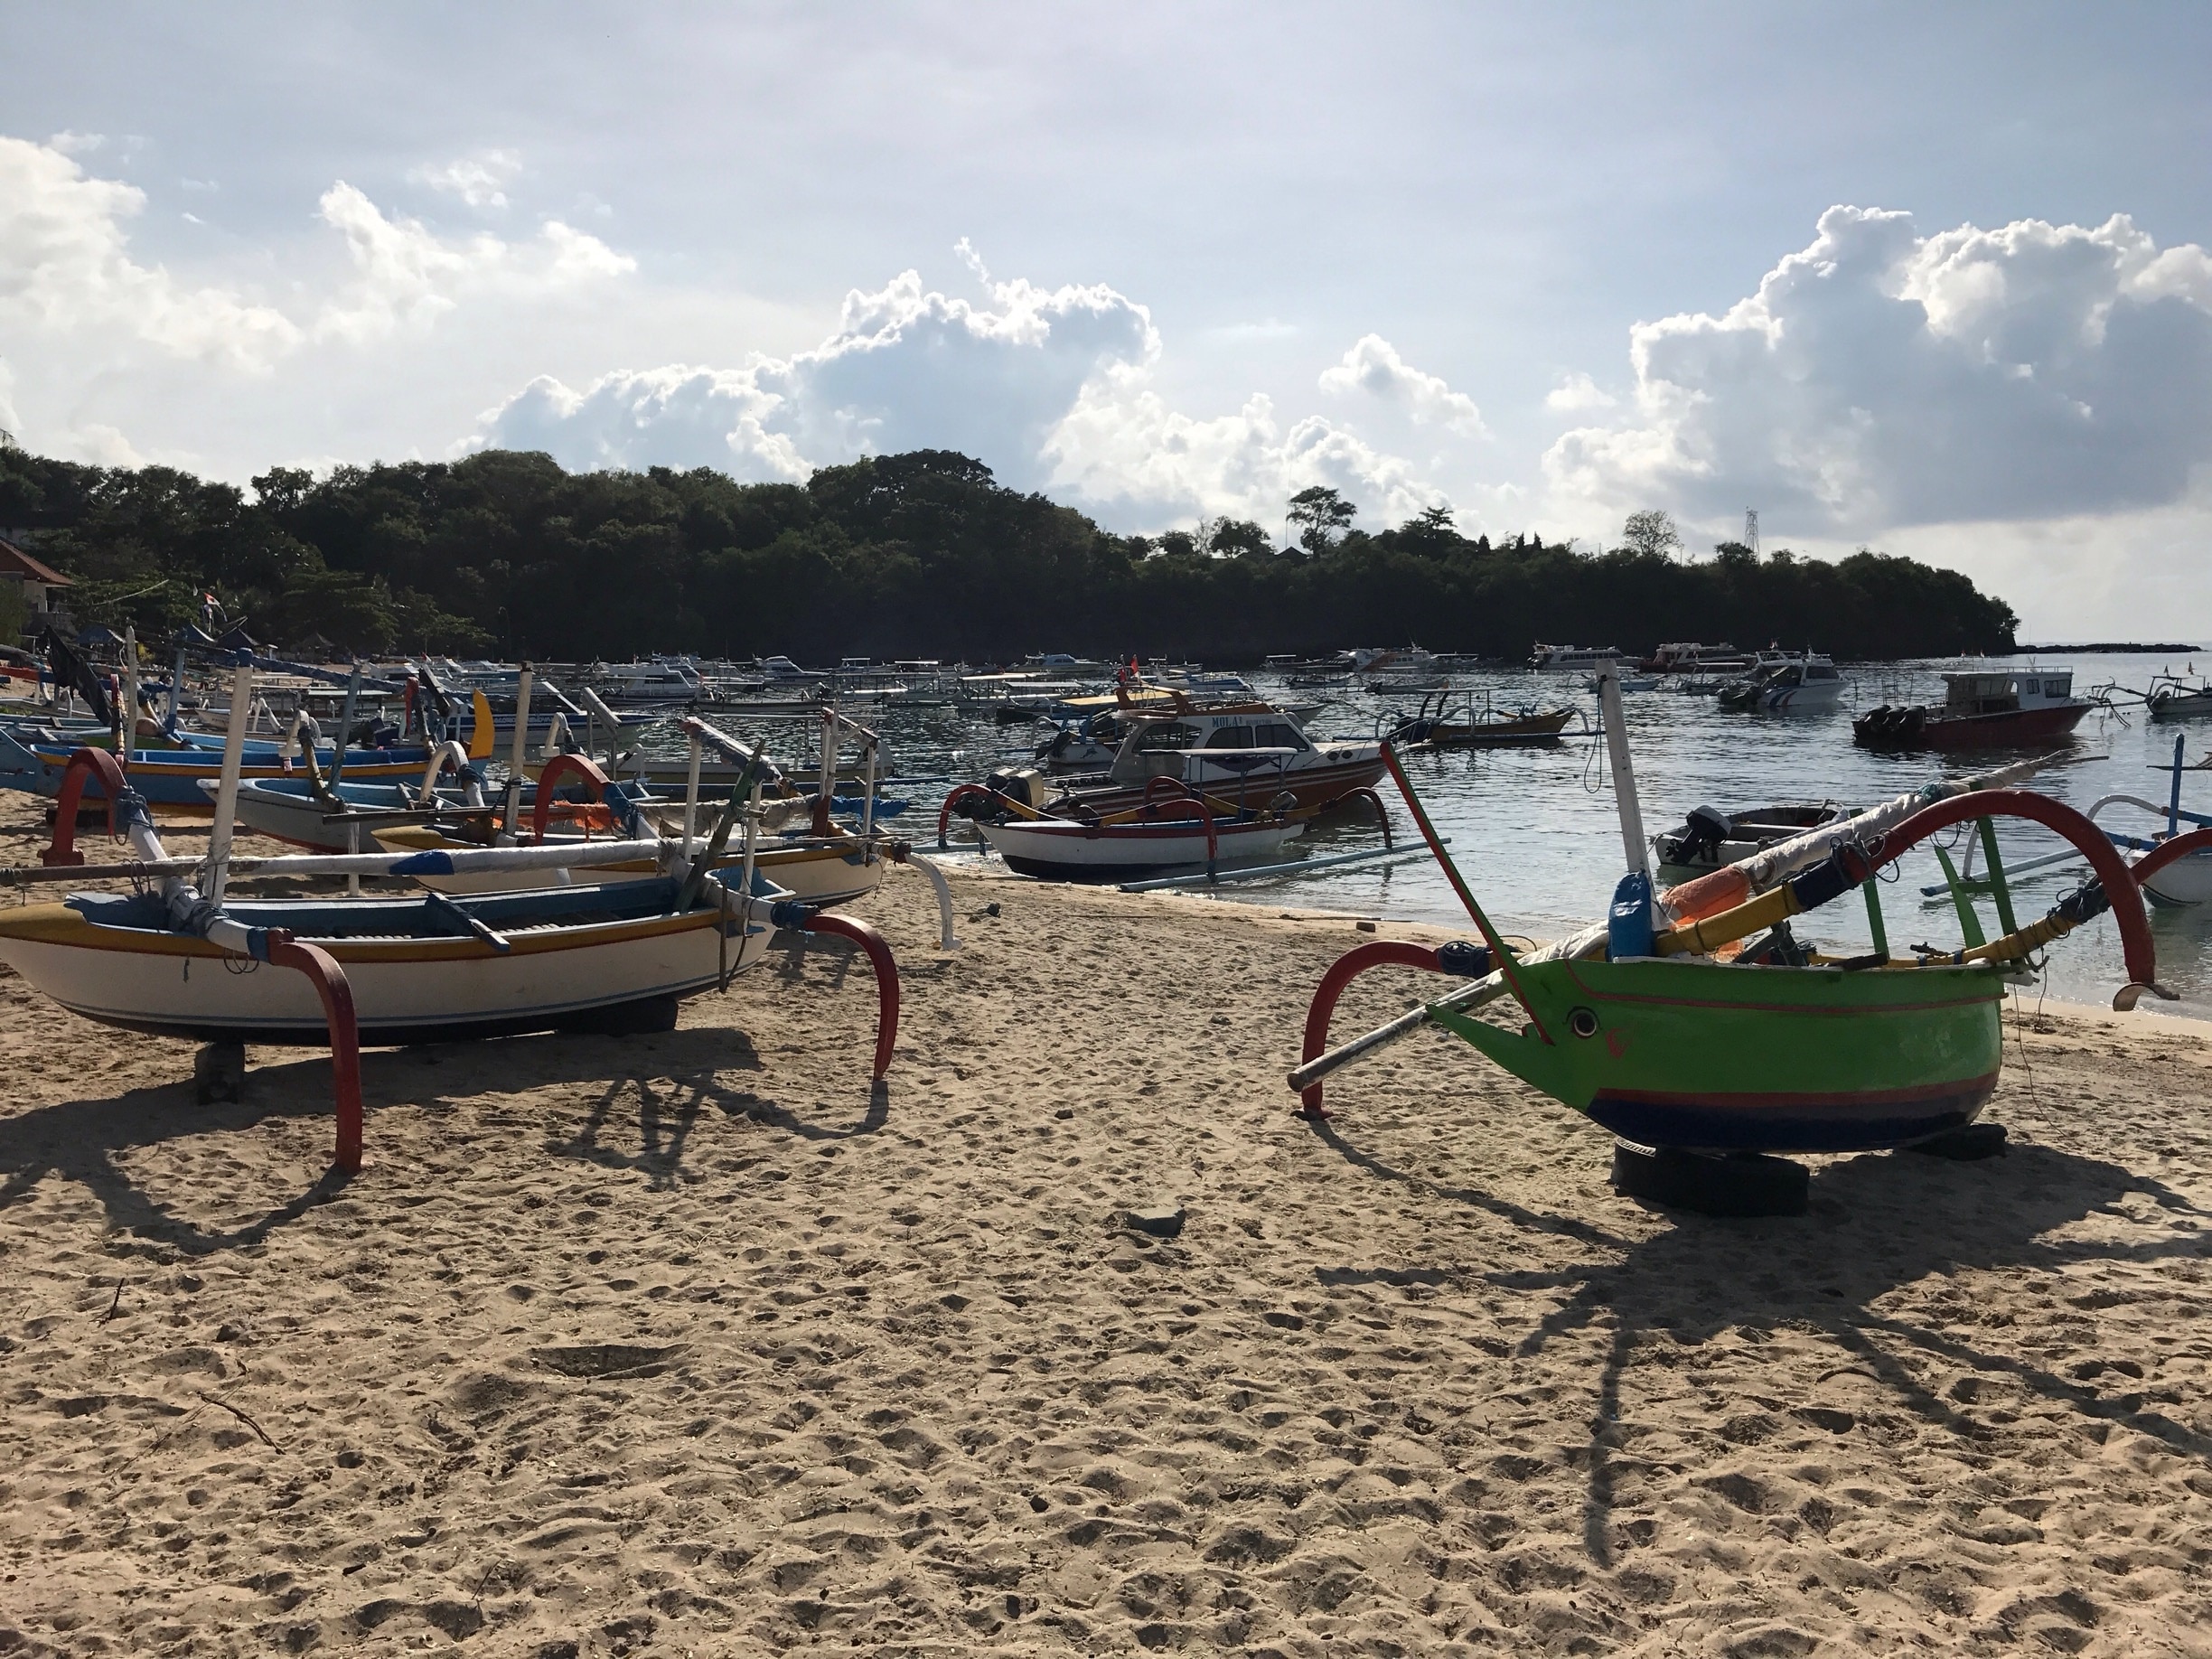 Visit Padangbai to see traditional jukung boats and go snorkelling